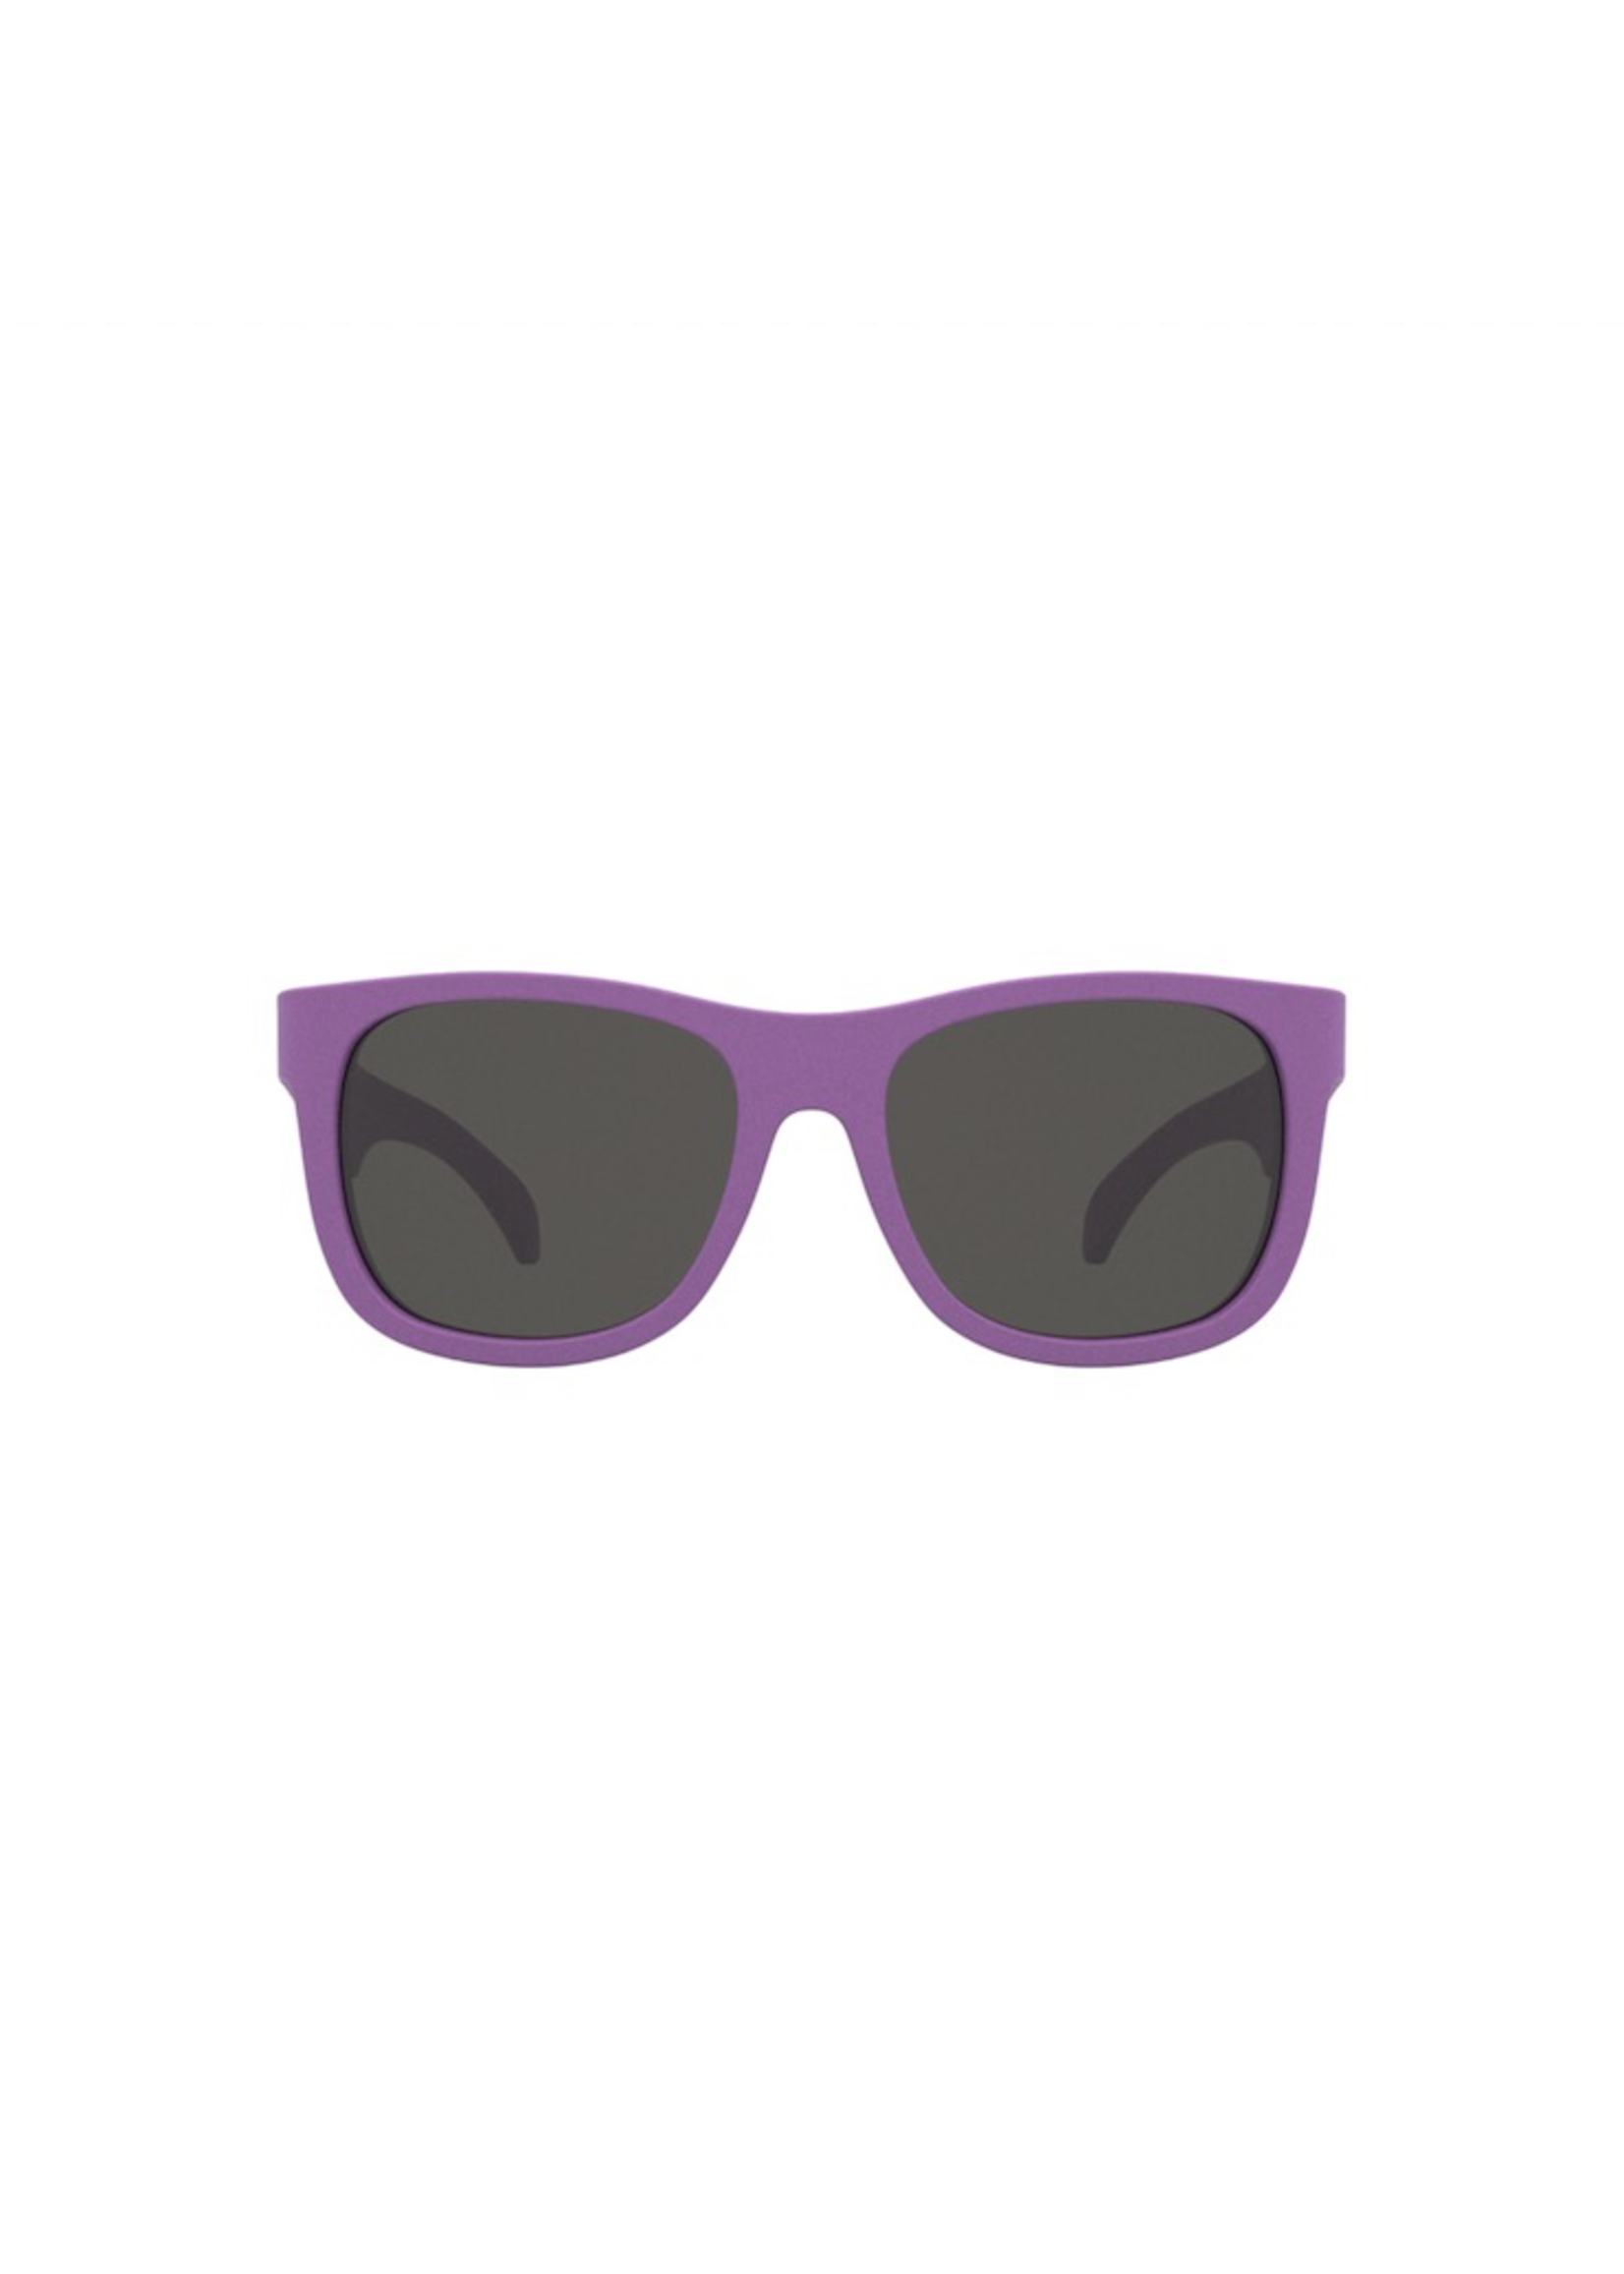 Babiators Babiators, Limited Edition, Navigator, Sunglasses, Ultra Violet